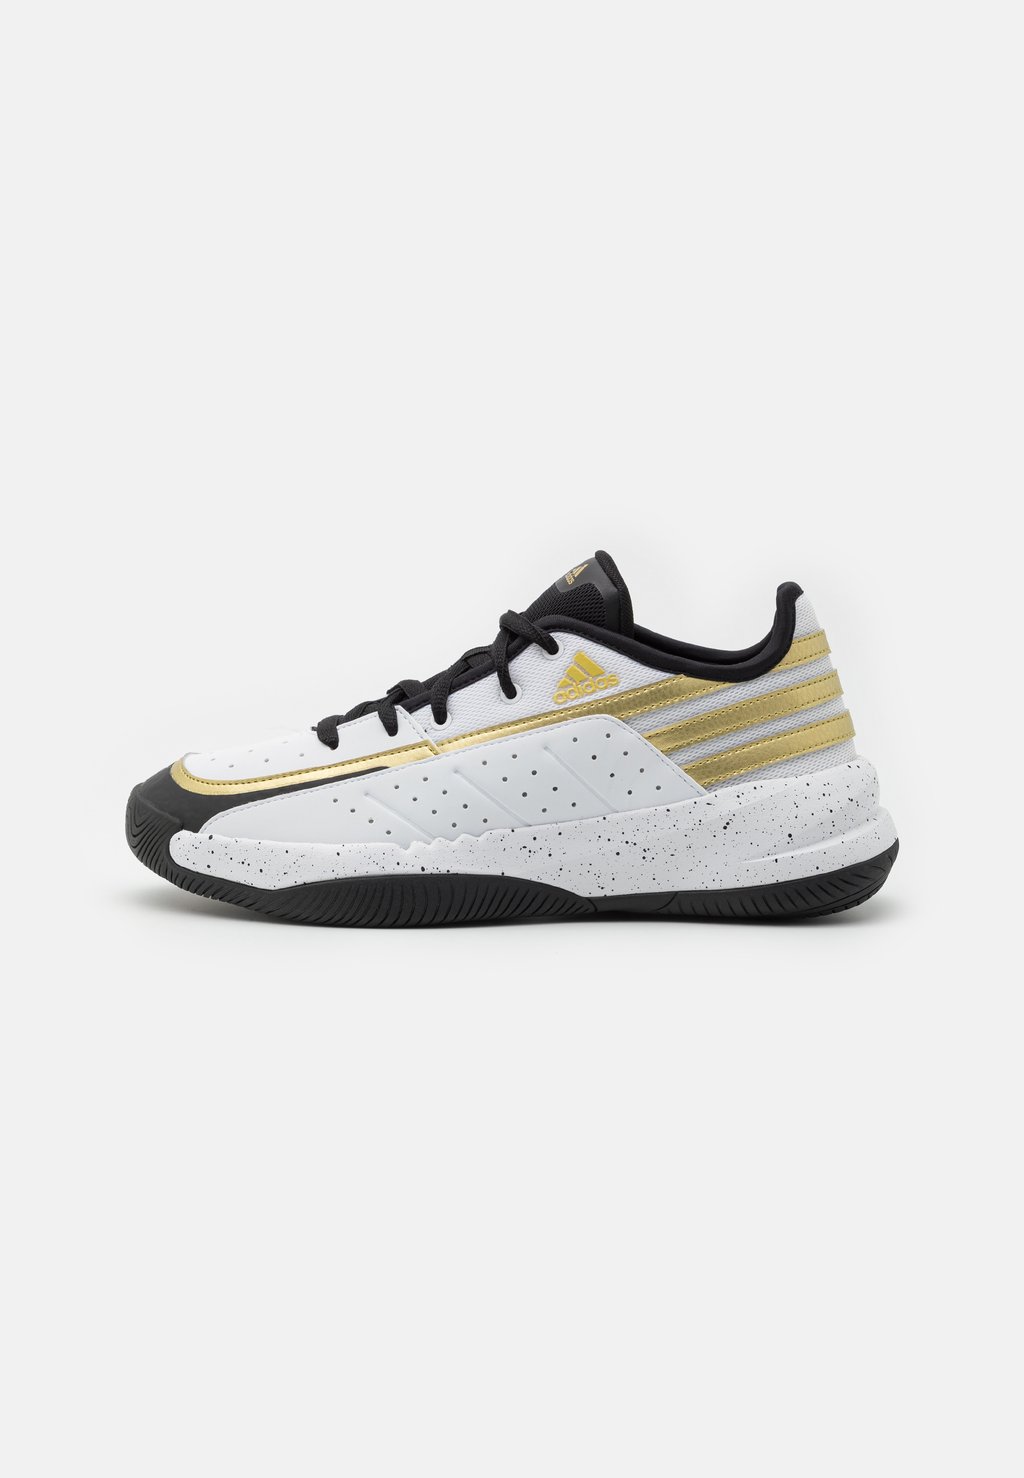 Баскетбольная обувь Front Court Adidas, цвет footwear white/core black/gold metallic